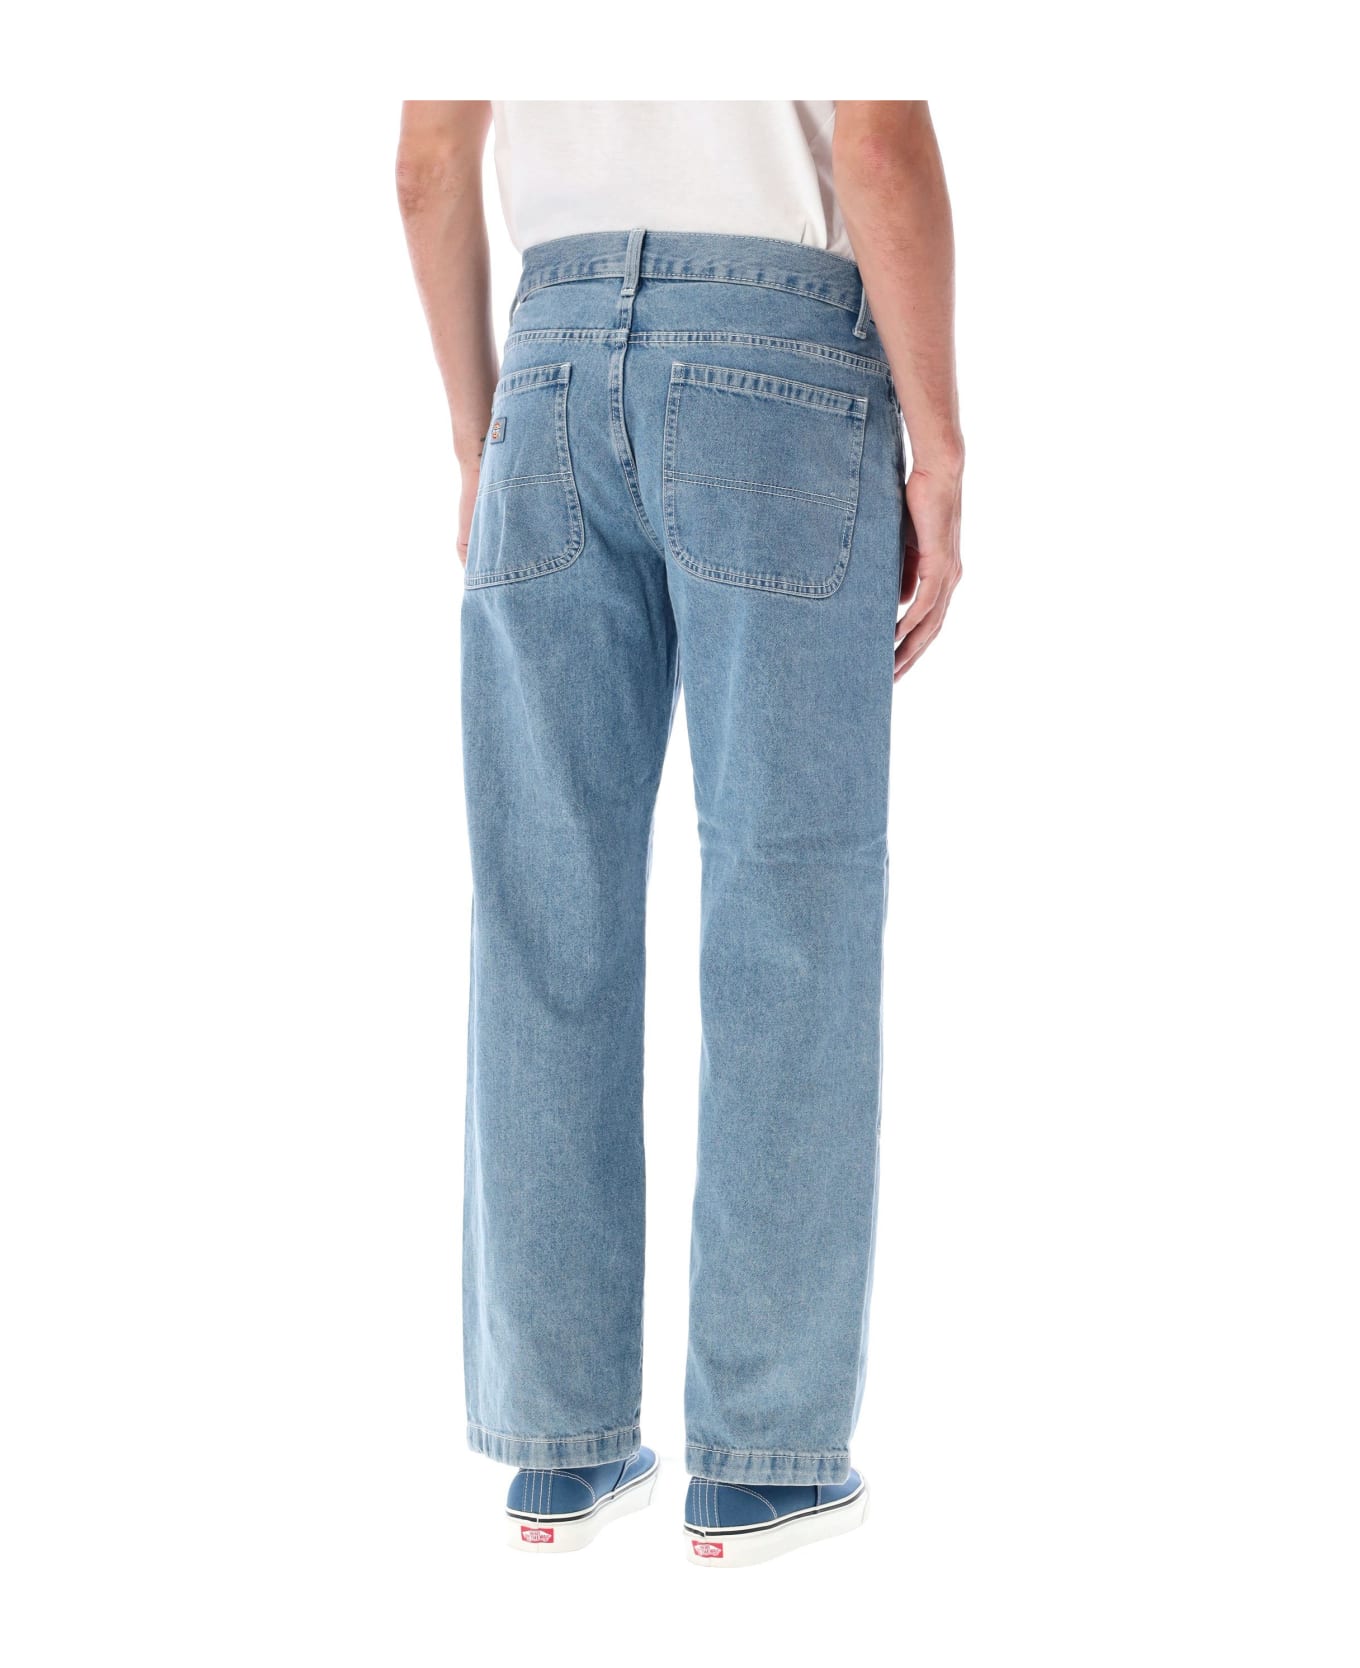 Dickies Double Knee Denim Jeans - LIGHT BLUE デニム